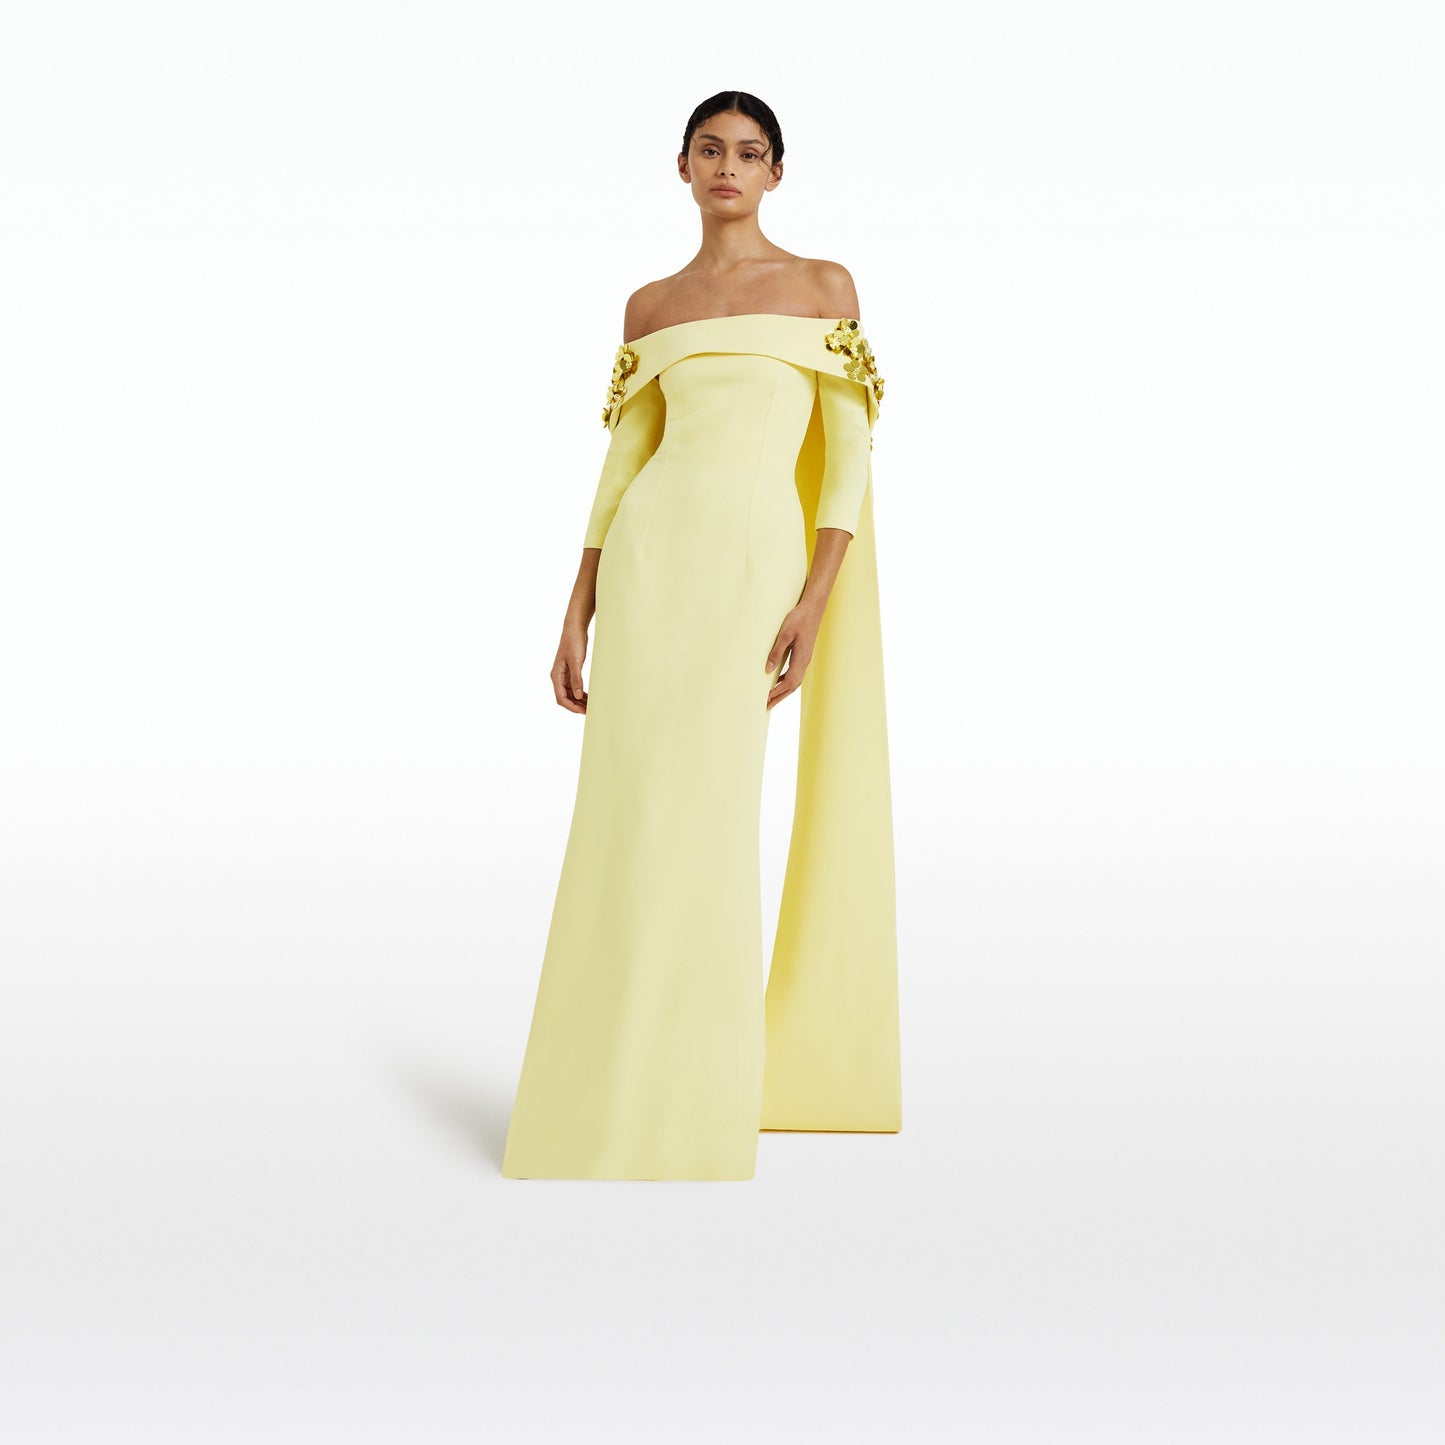 Bellara Pale Yellow Harness & Soshin Dress